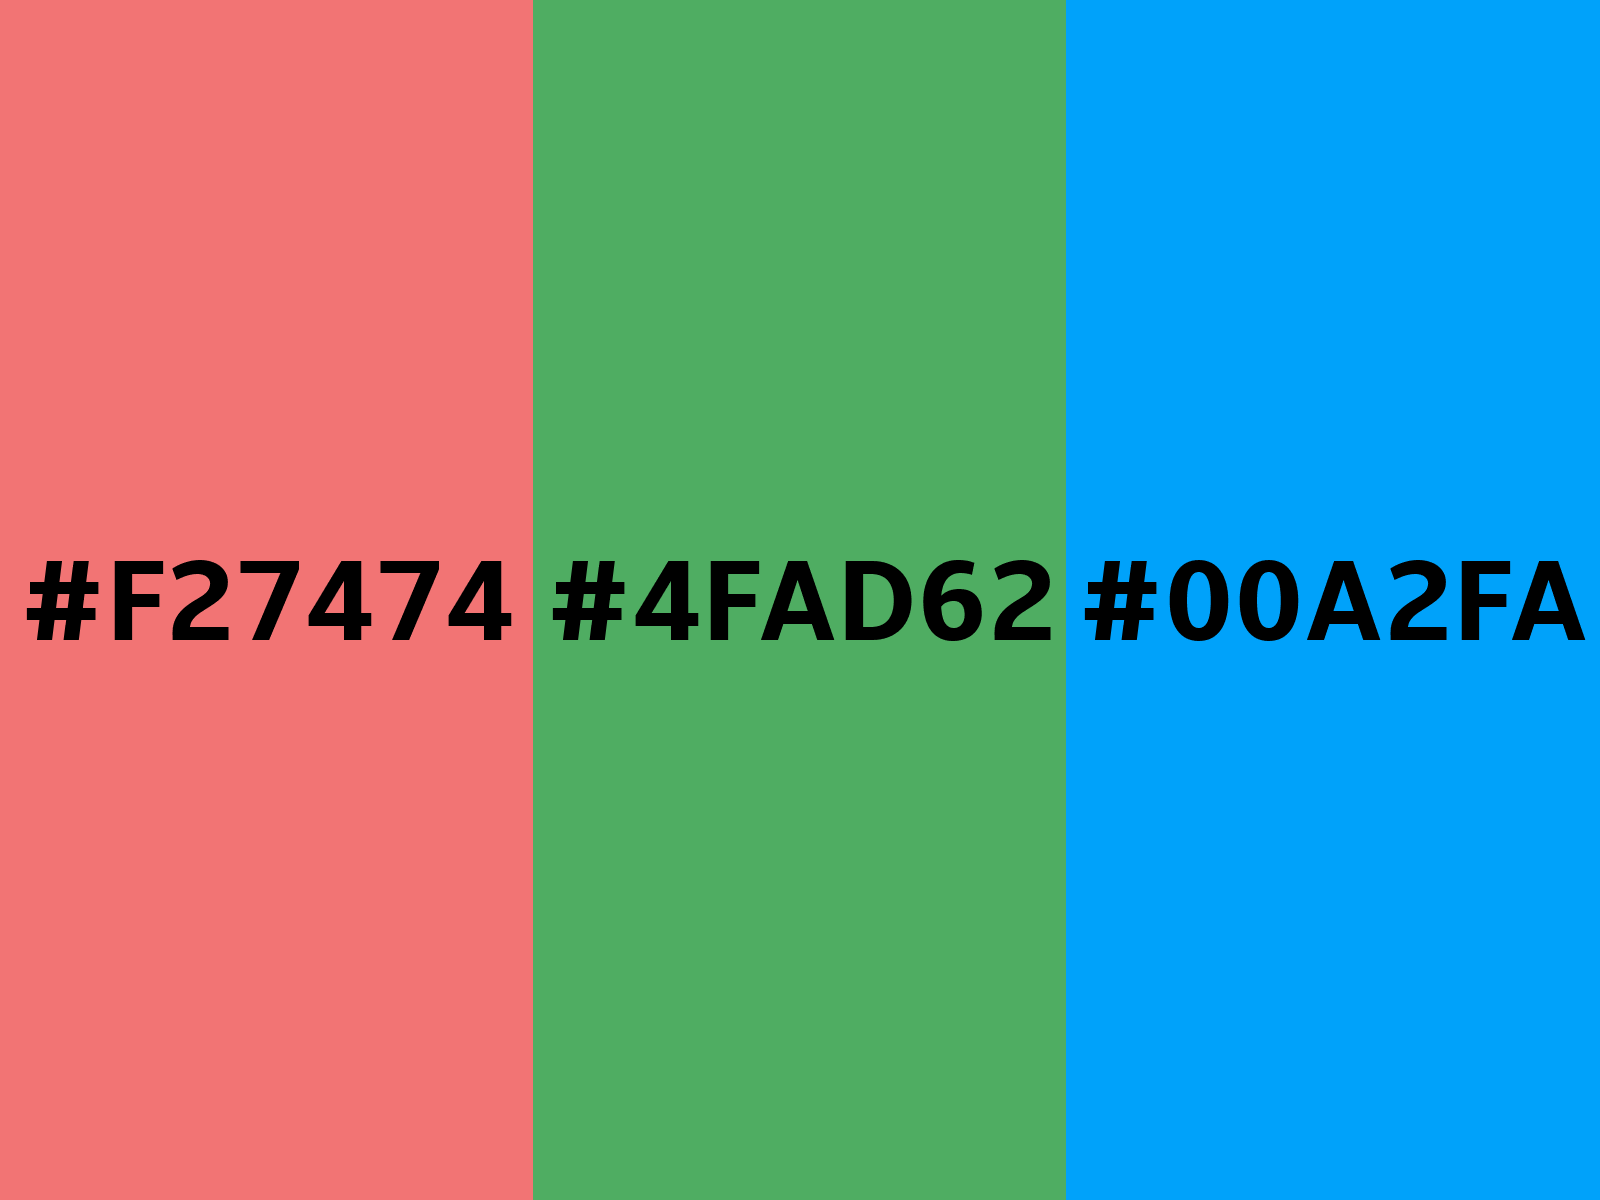 Hex F27474 color